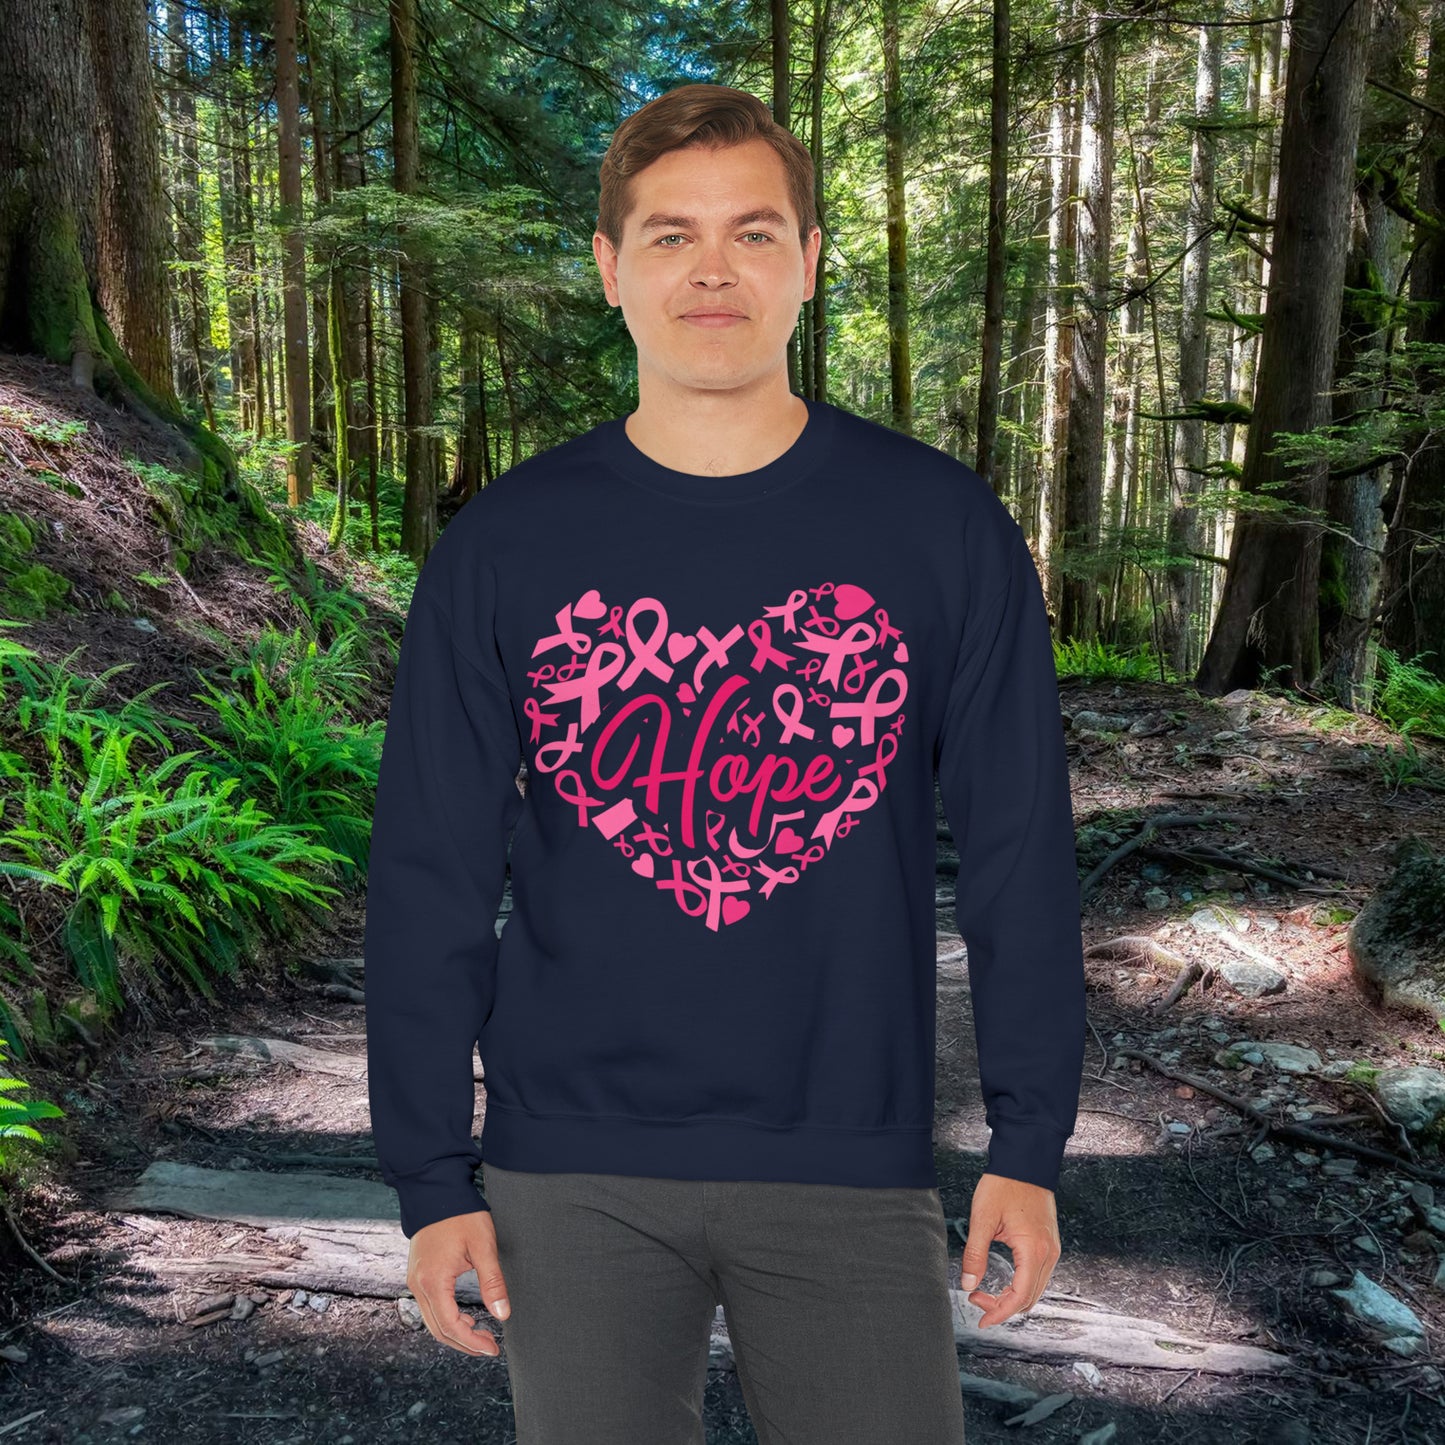 Hope Heart Breast Cancer Awareness Sweatshirt